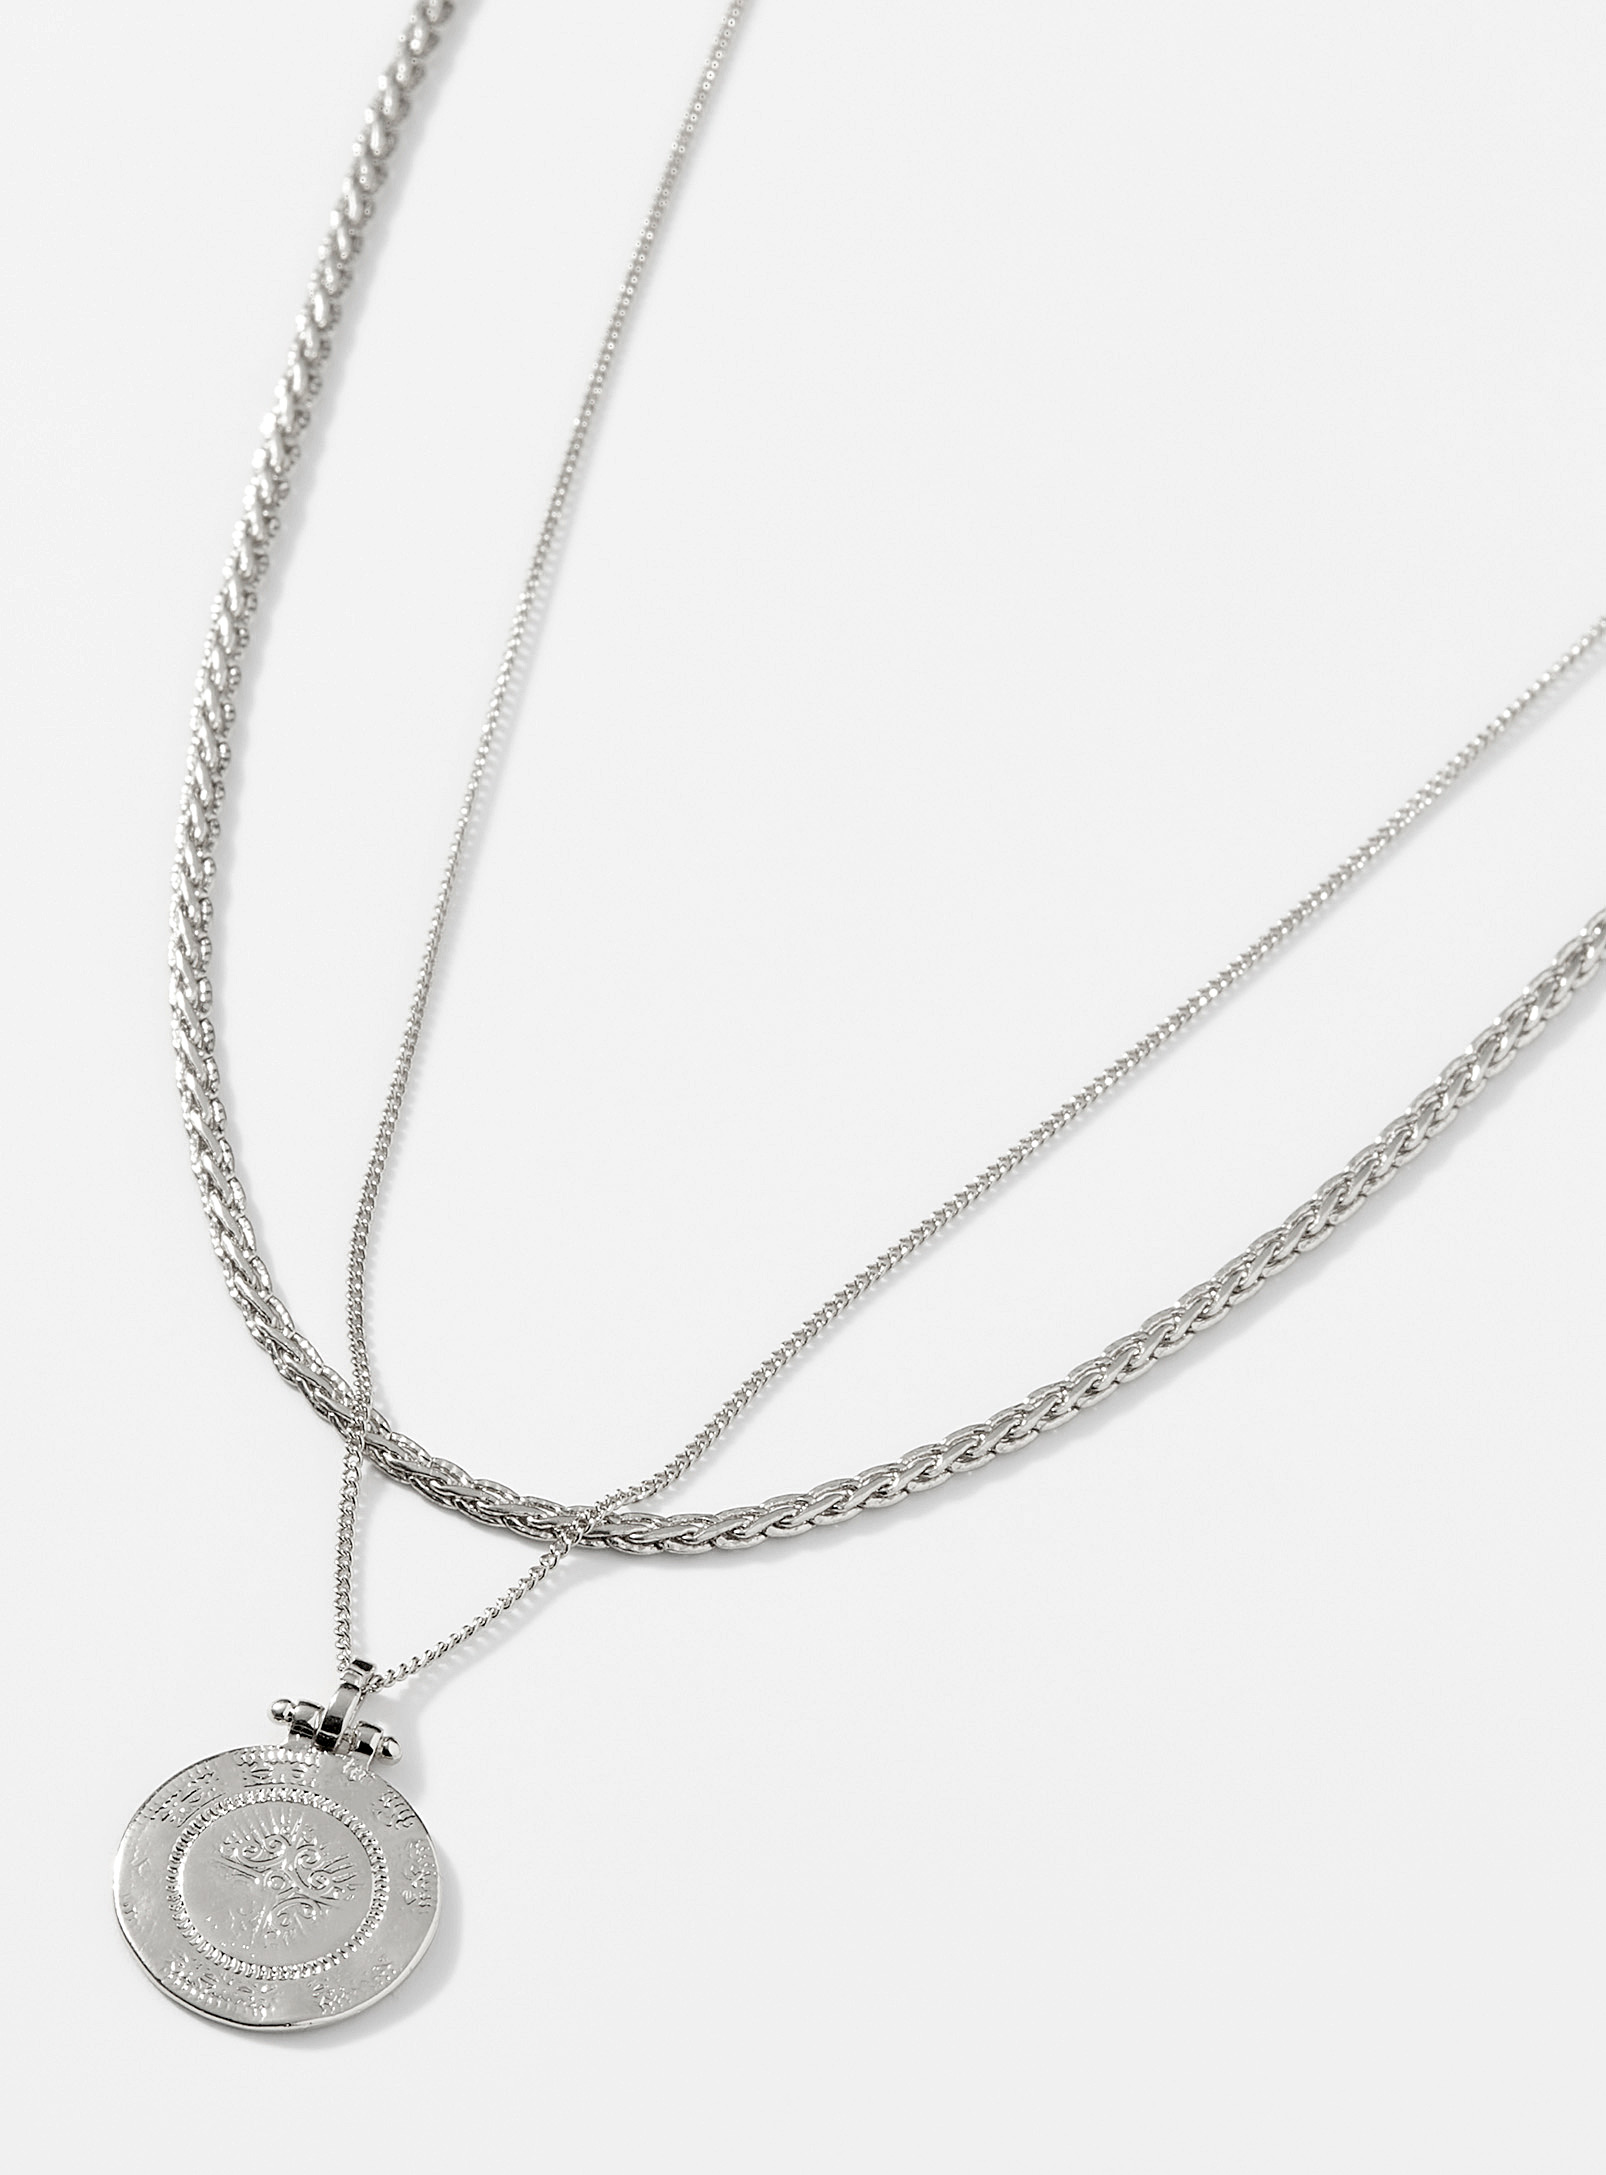 Pilgrim - Women's Antique pendant necklaces Set of 2